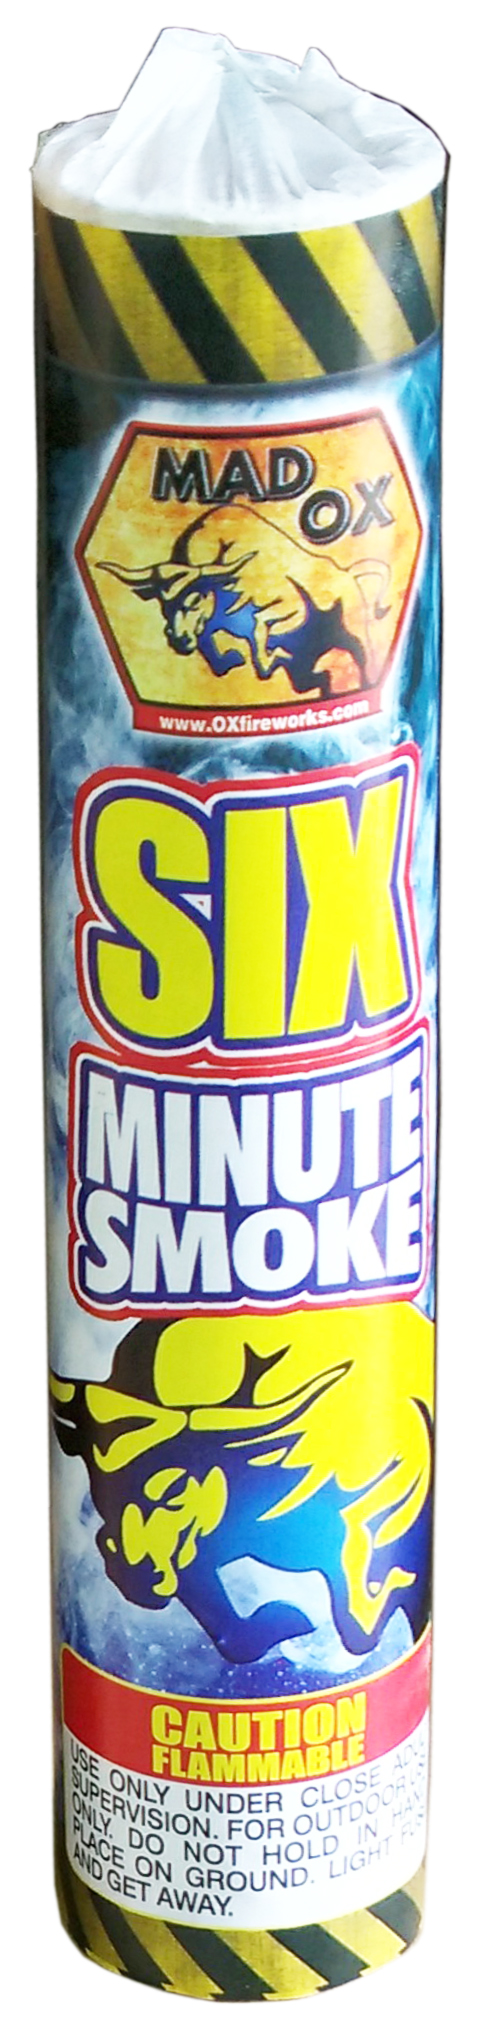 6 Minute Smoke